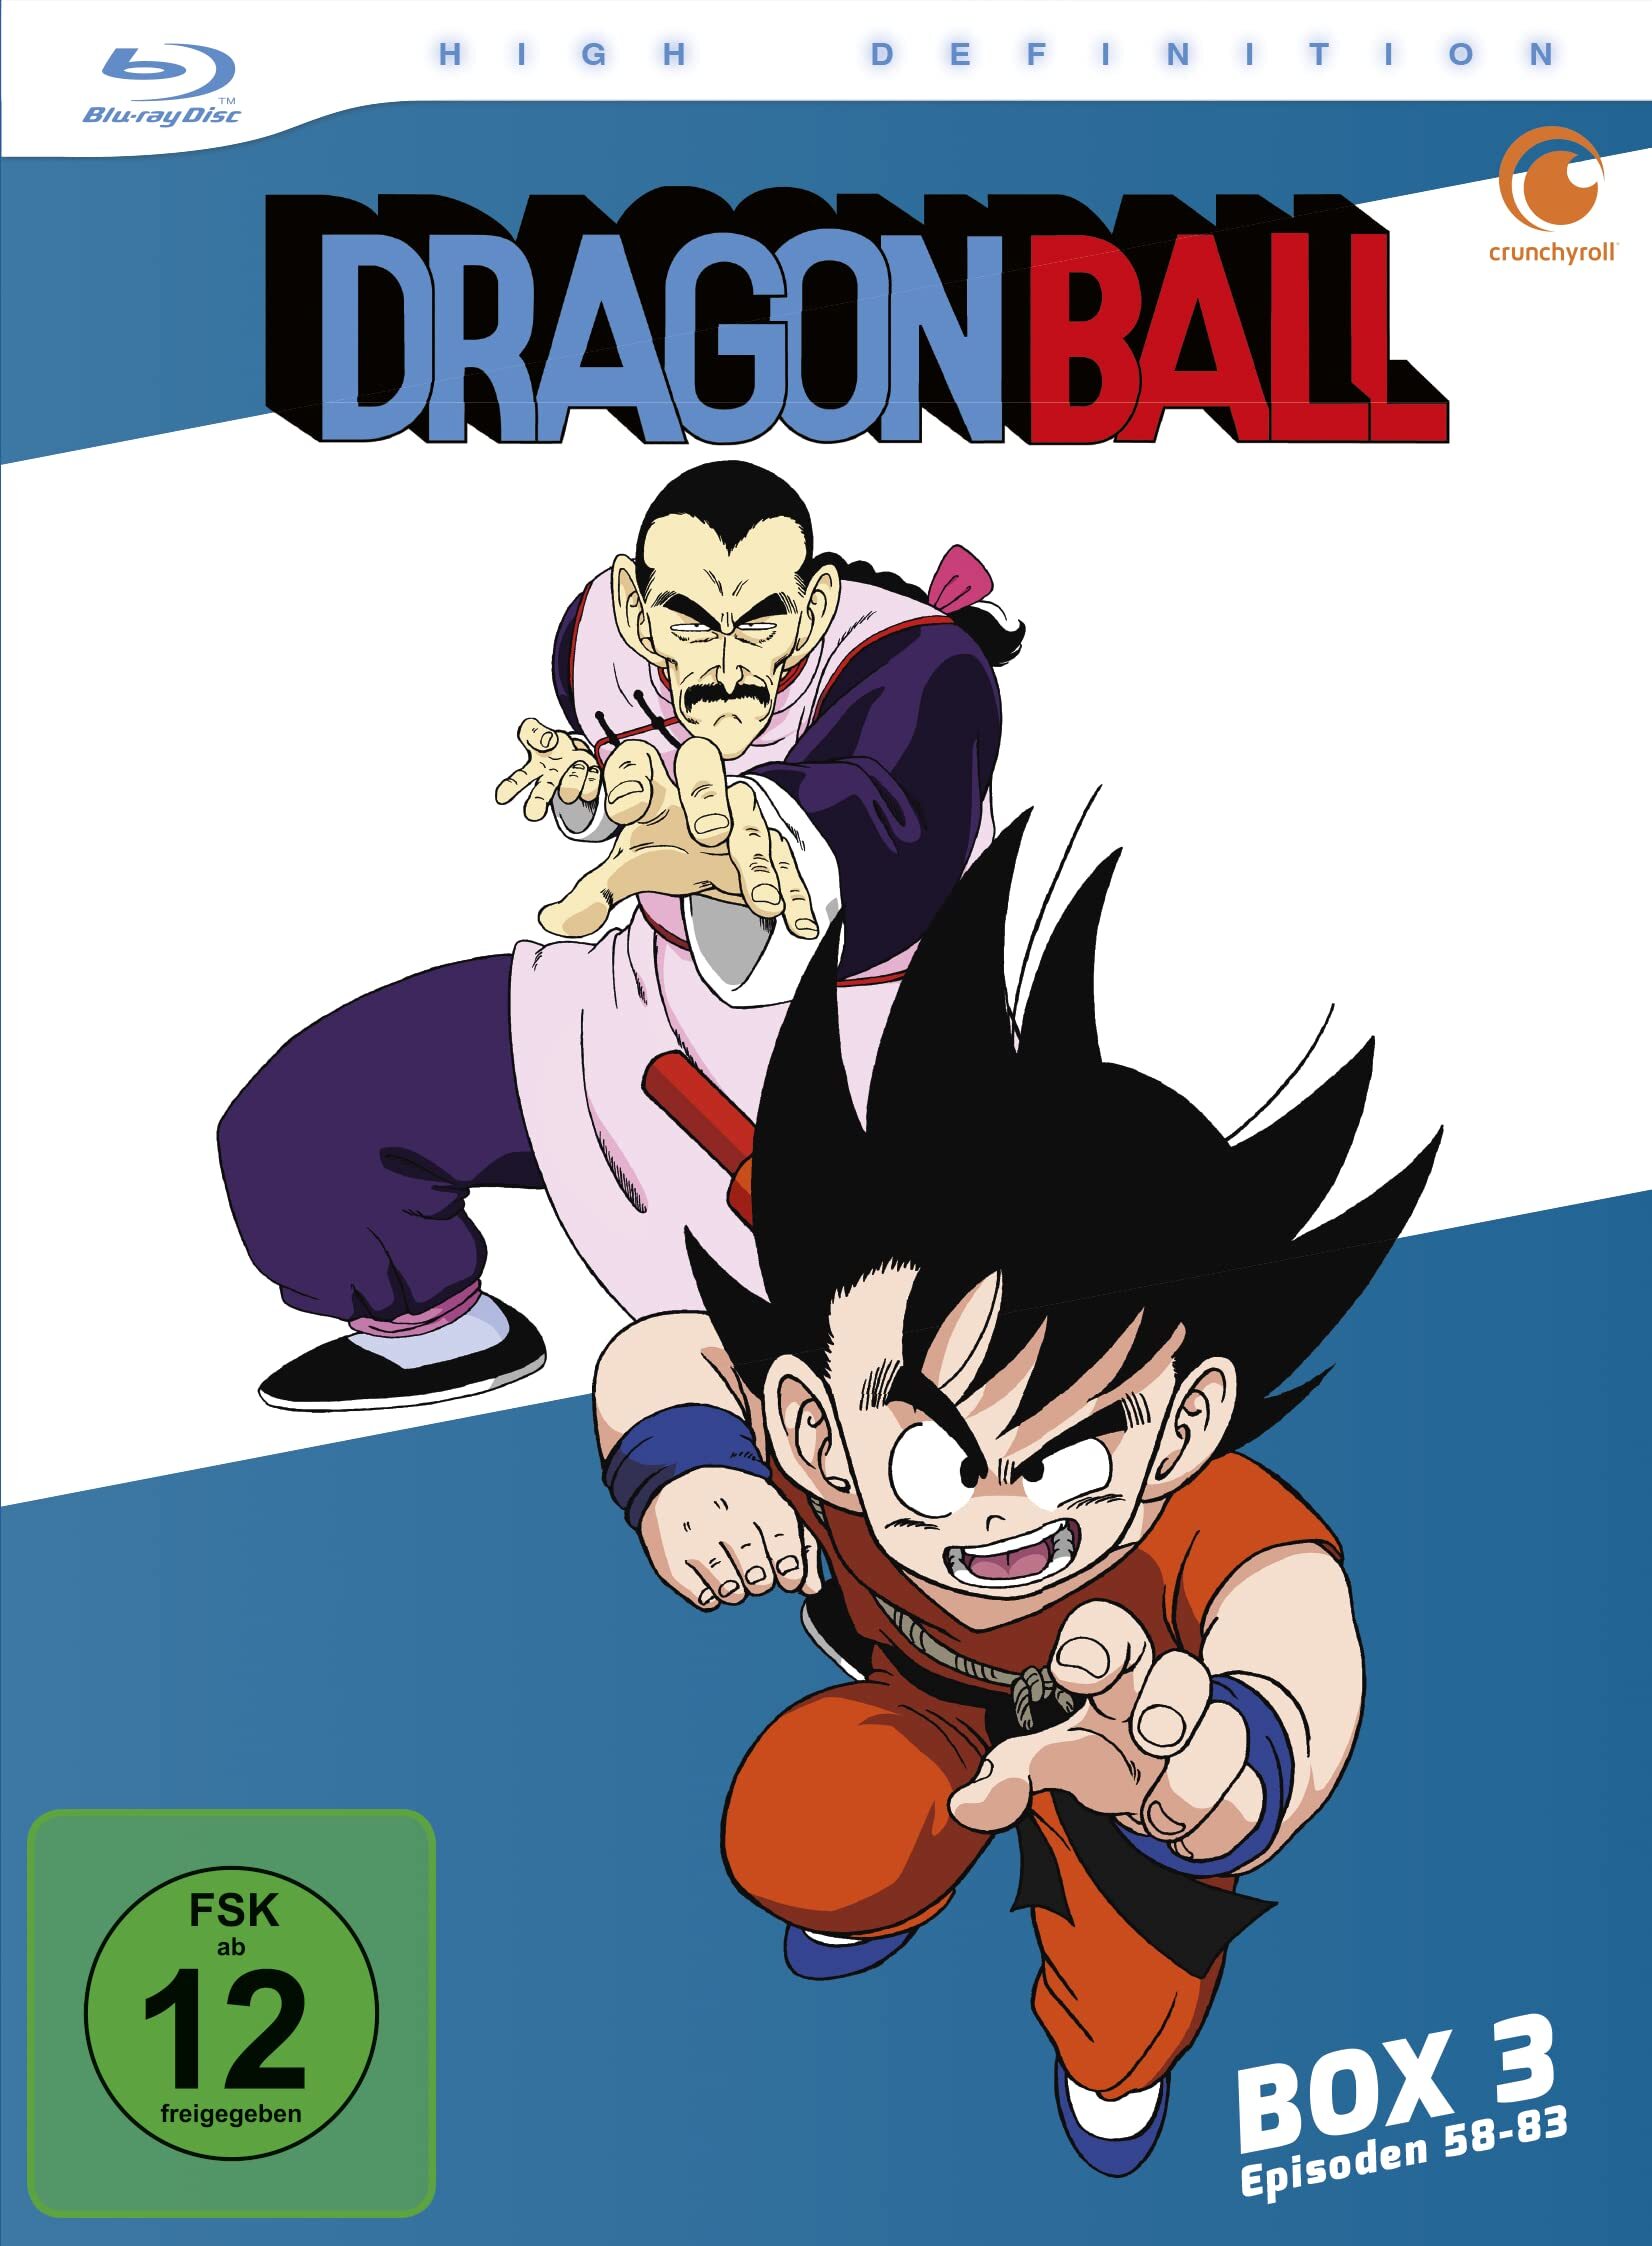 NEW Dragon Ball Super SUPER HERO 4K UHD Blu-Ray DVD Release Trailer  (Japanese + FUNimation) 